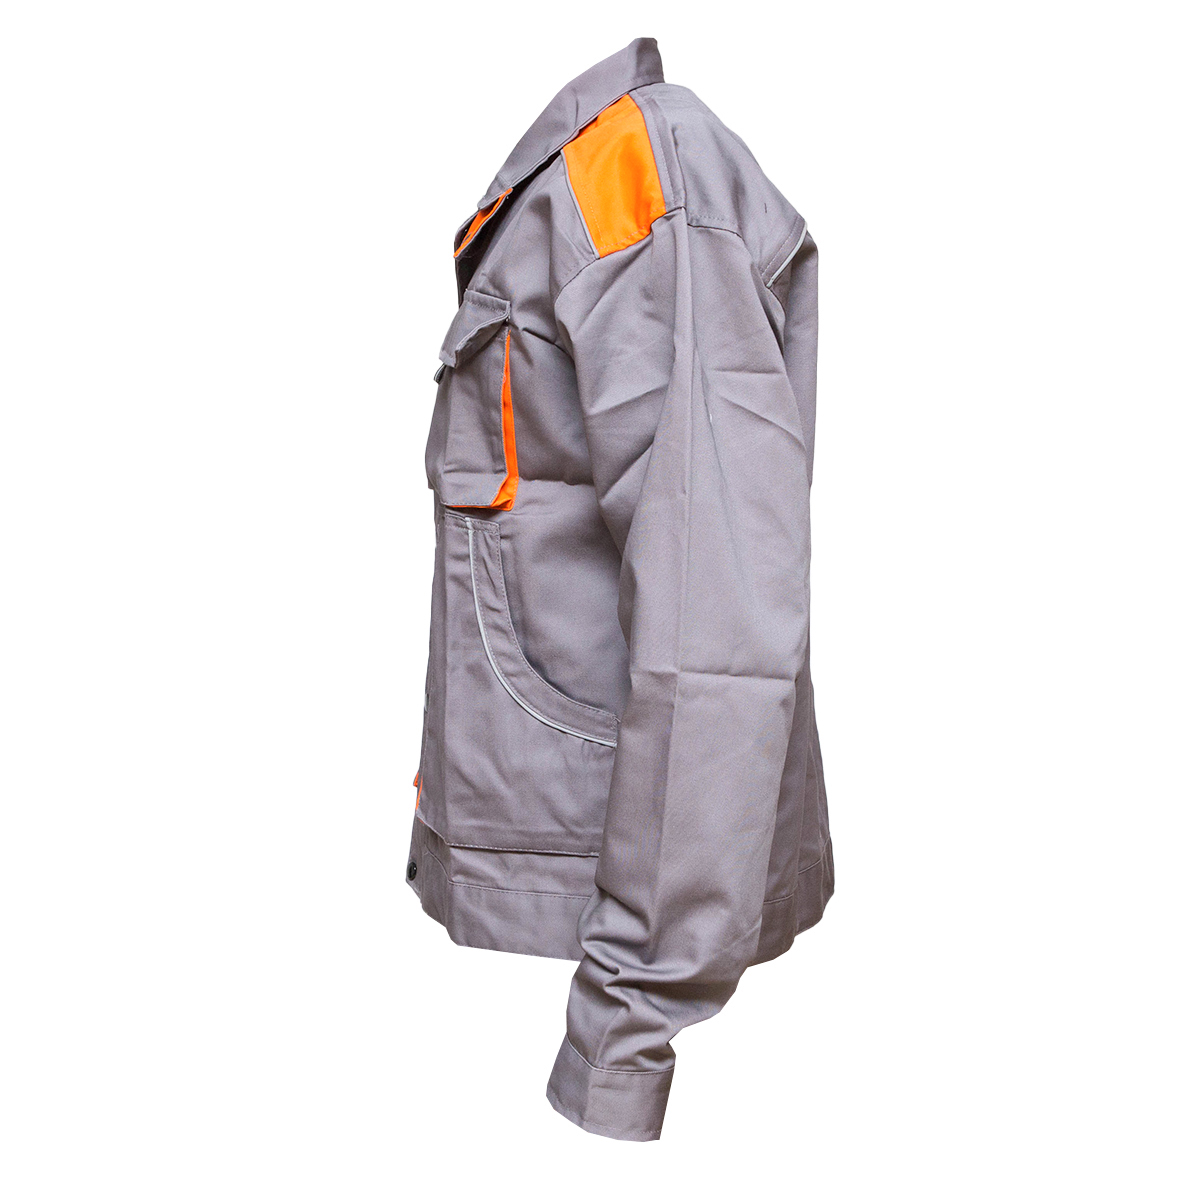 Jacheta de lucru poliester cu bumbac, gri/portocaliu marimea 56, 235g/m2 Breckner Germany